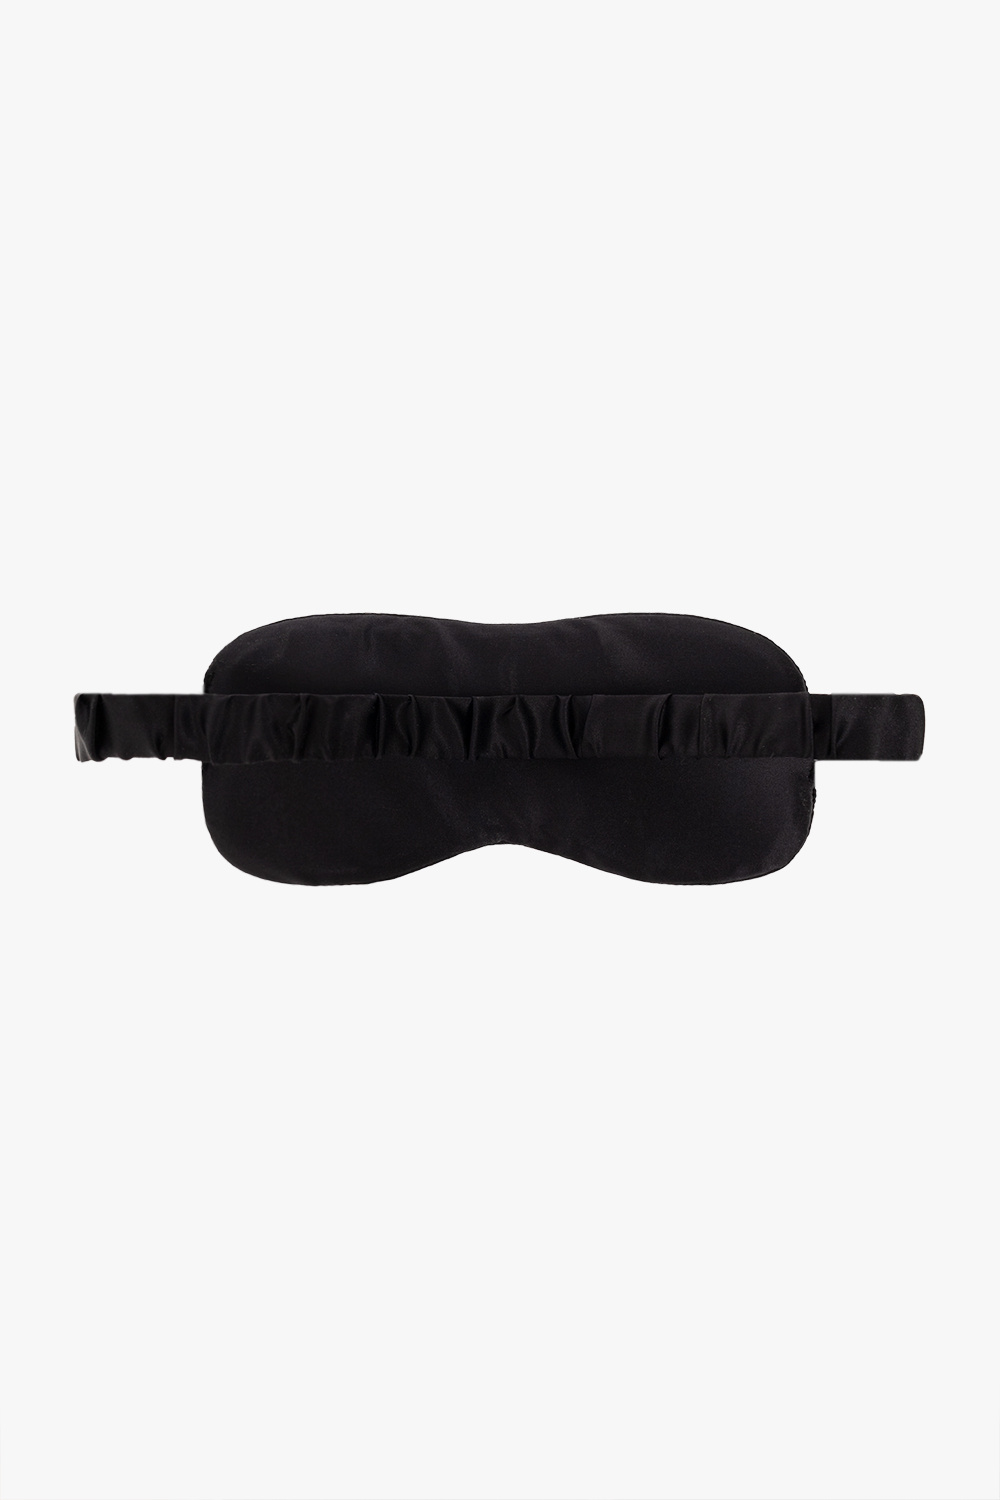 Chantal Thomass ‘Fascinante’ blindfold